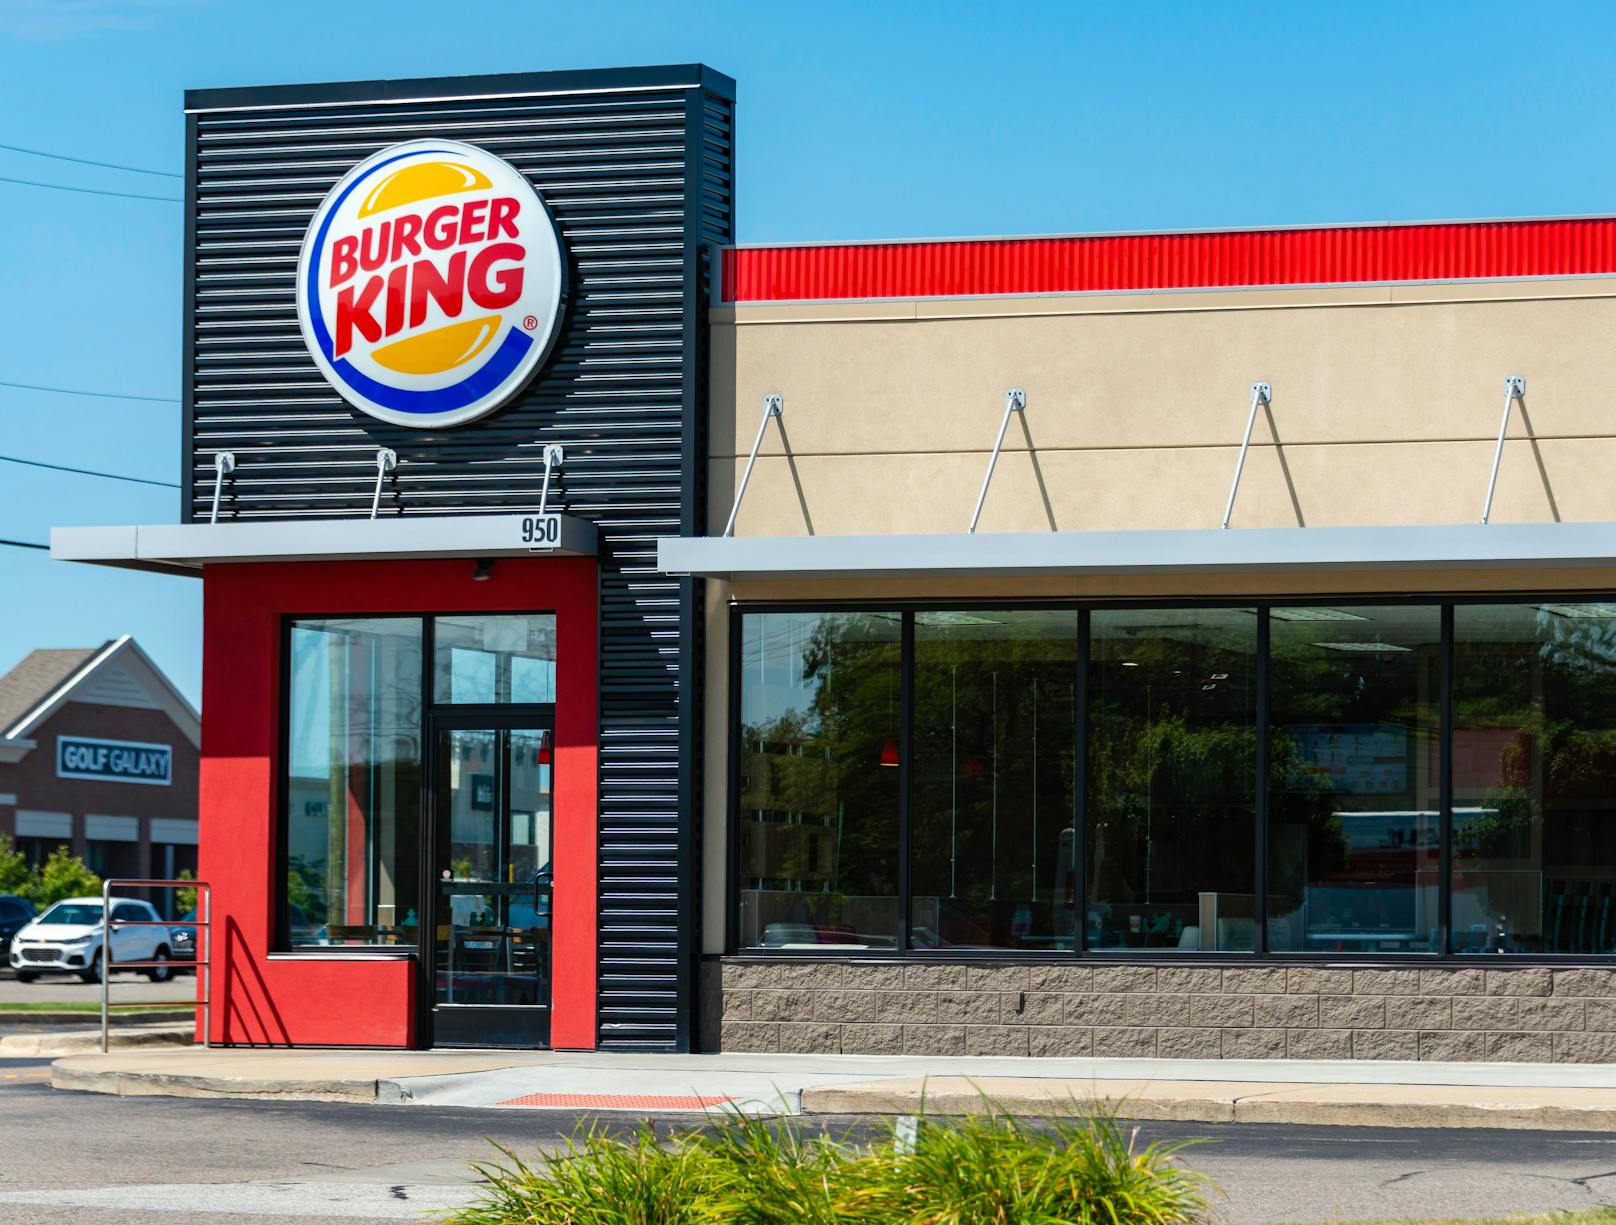 Mann rutscht in Burger King aus, kassiert 8 Millionen